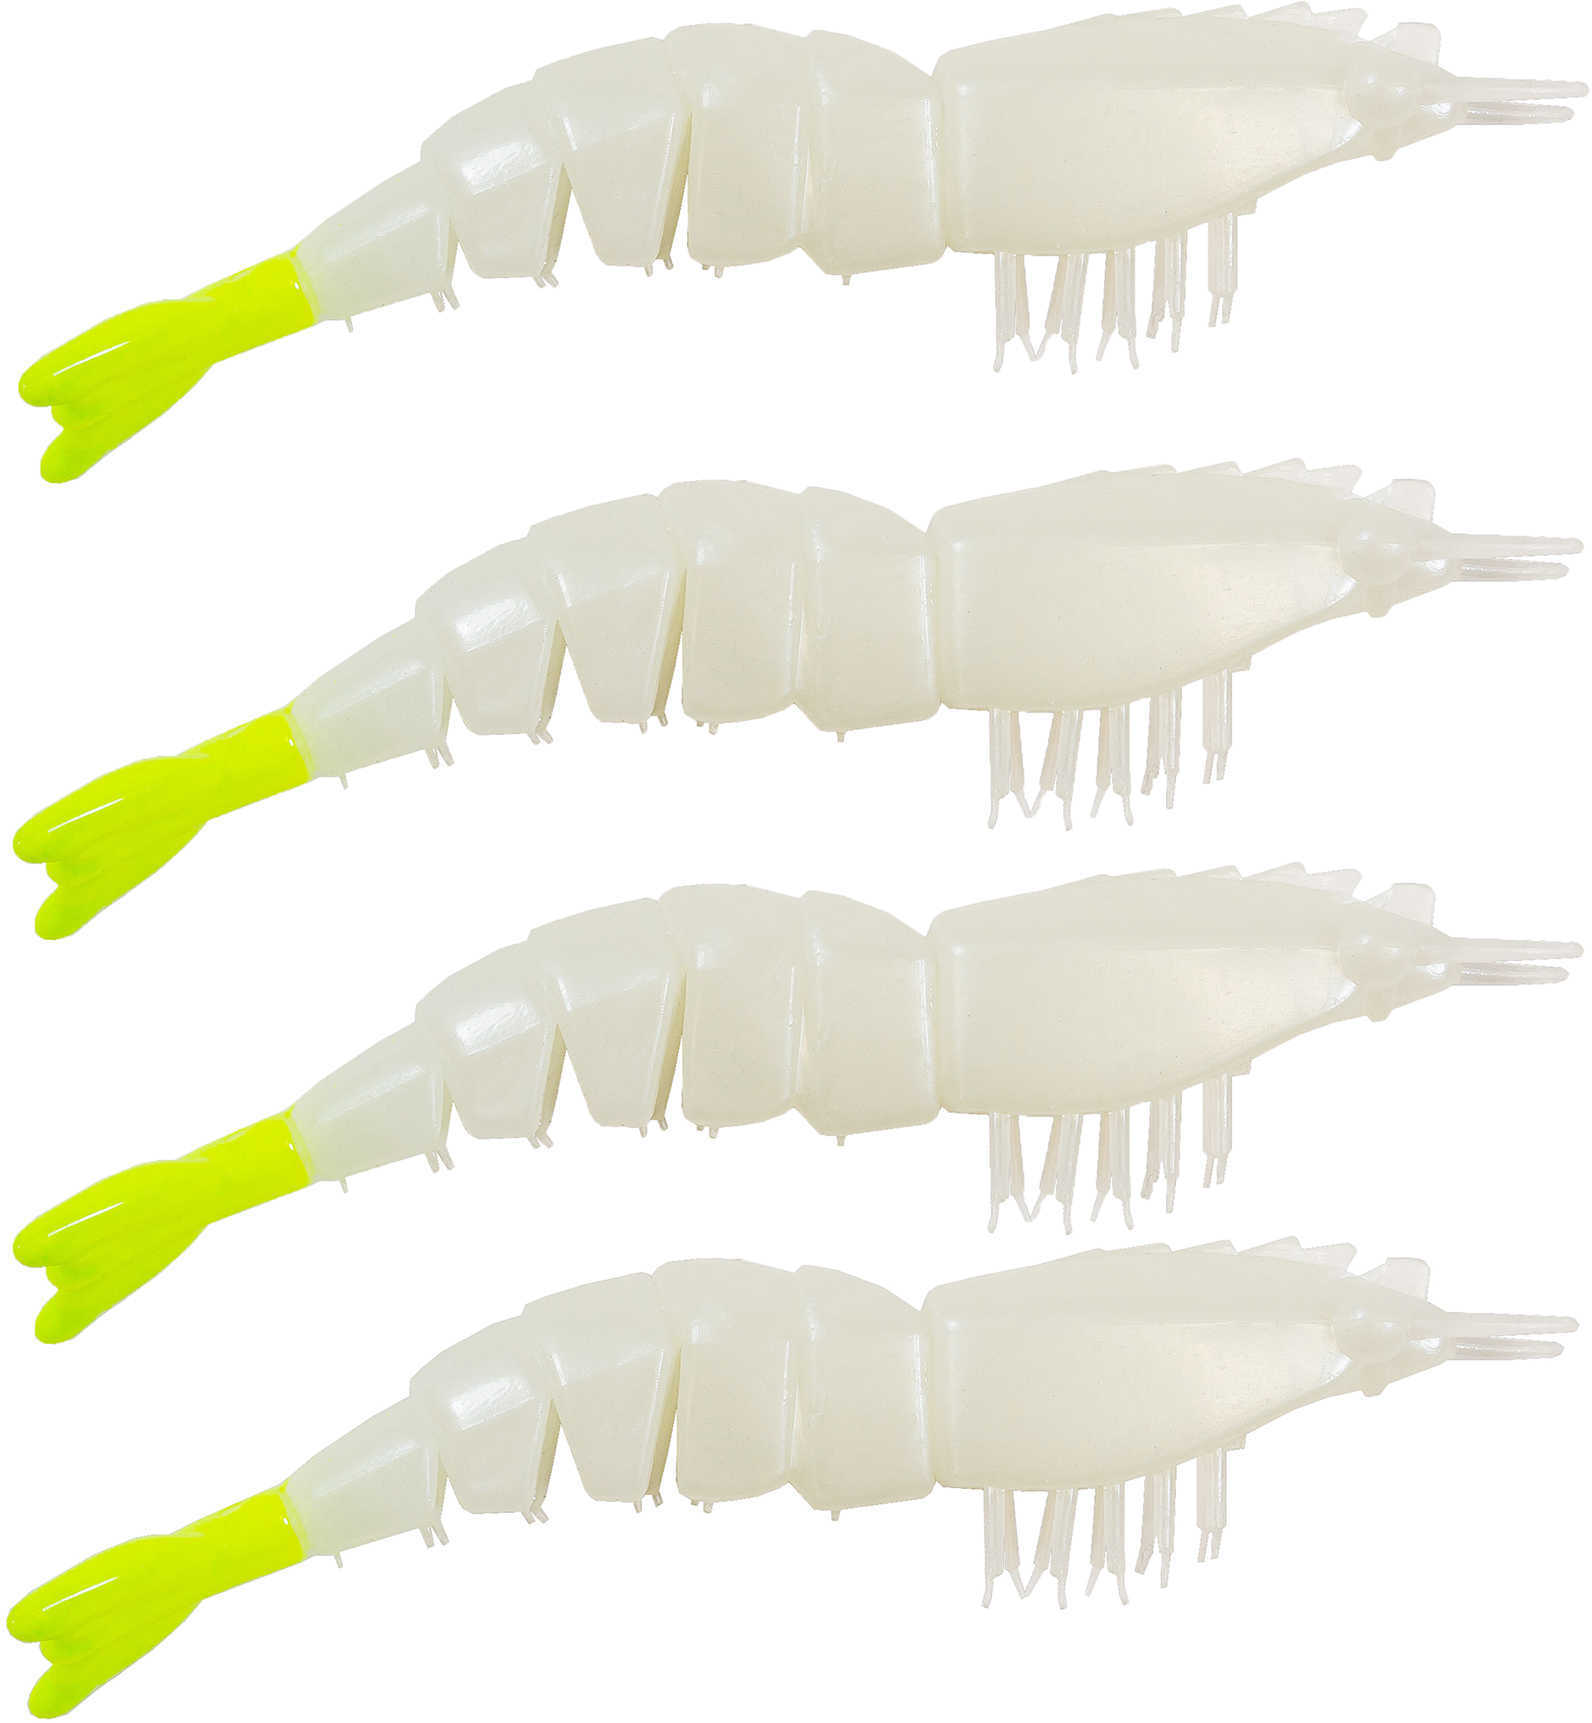 Z-Man Ez Shrimpz Unrigged 3.5-Inch Bait, GloWith Chartreuse Tail, 4 Per Bag Md: EZSU-70PK4